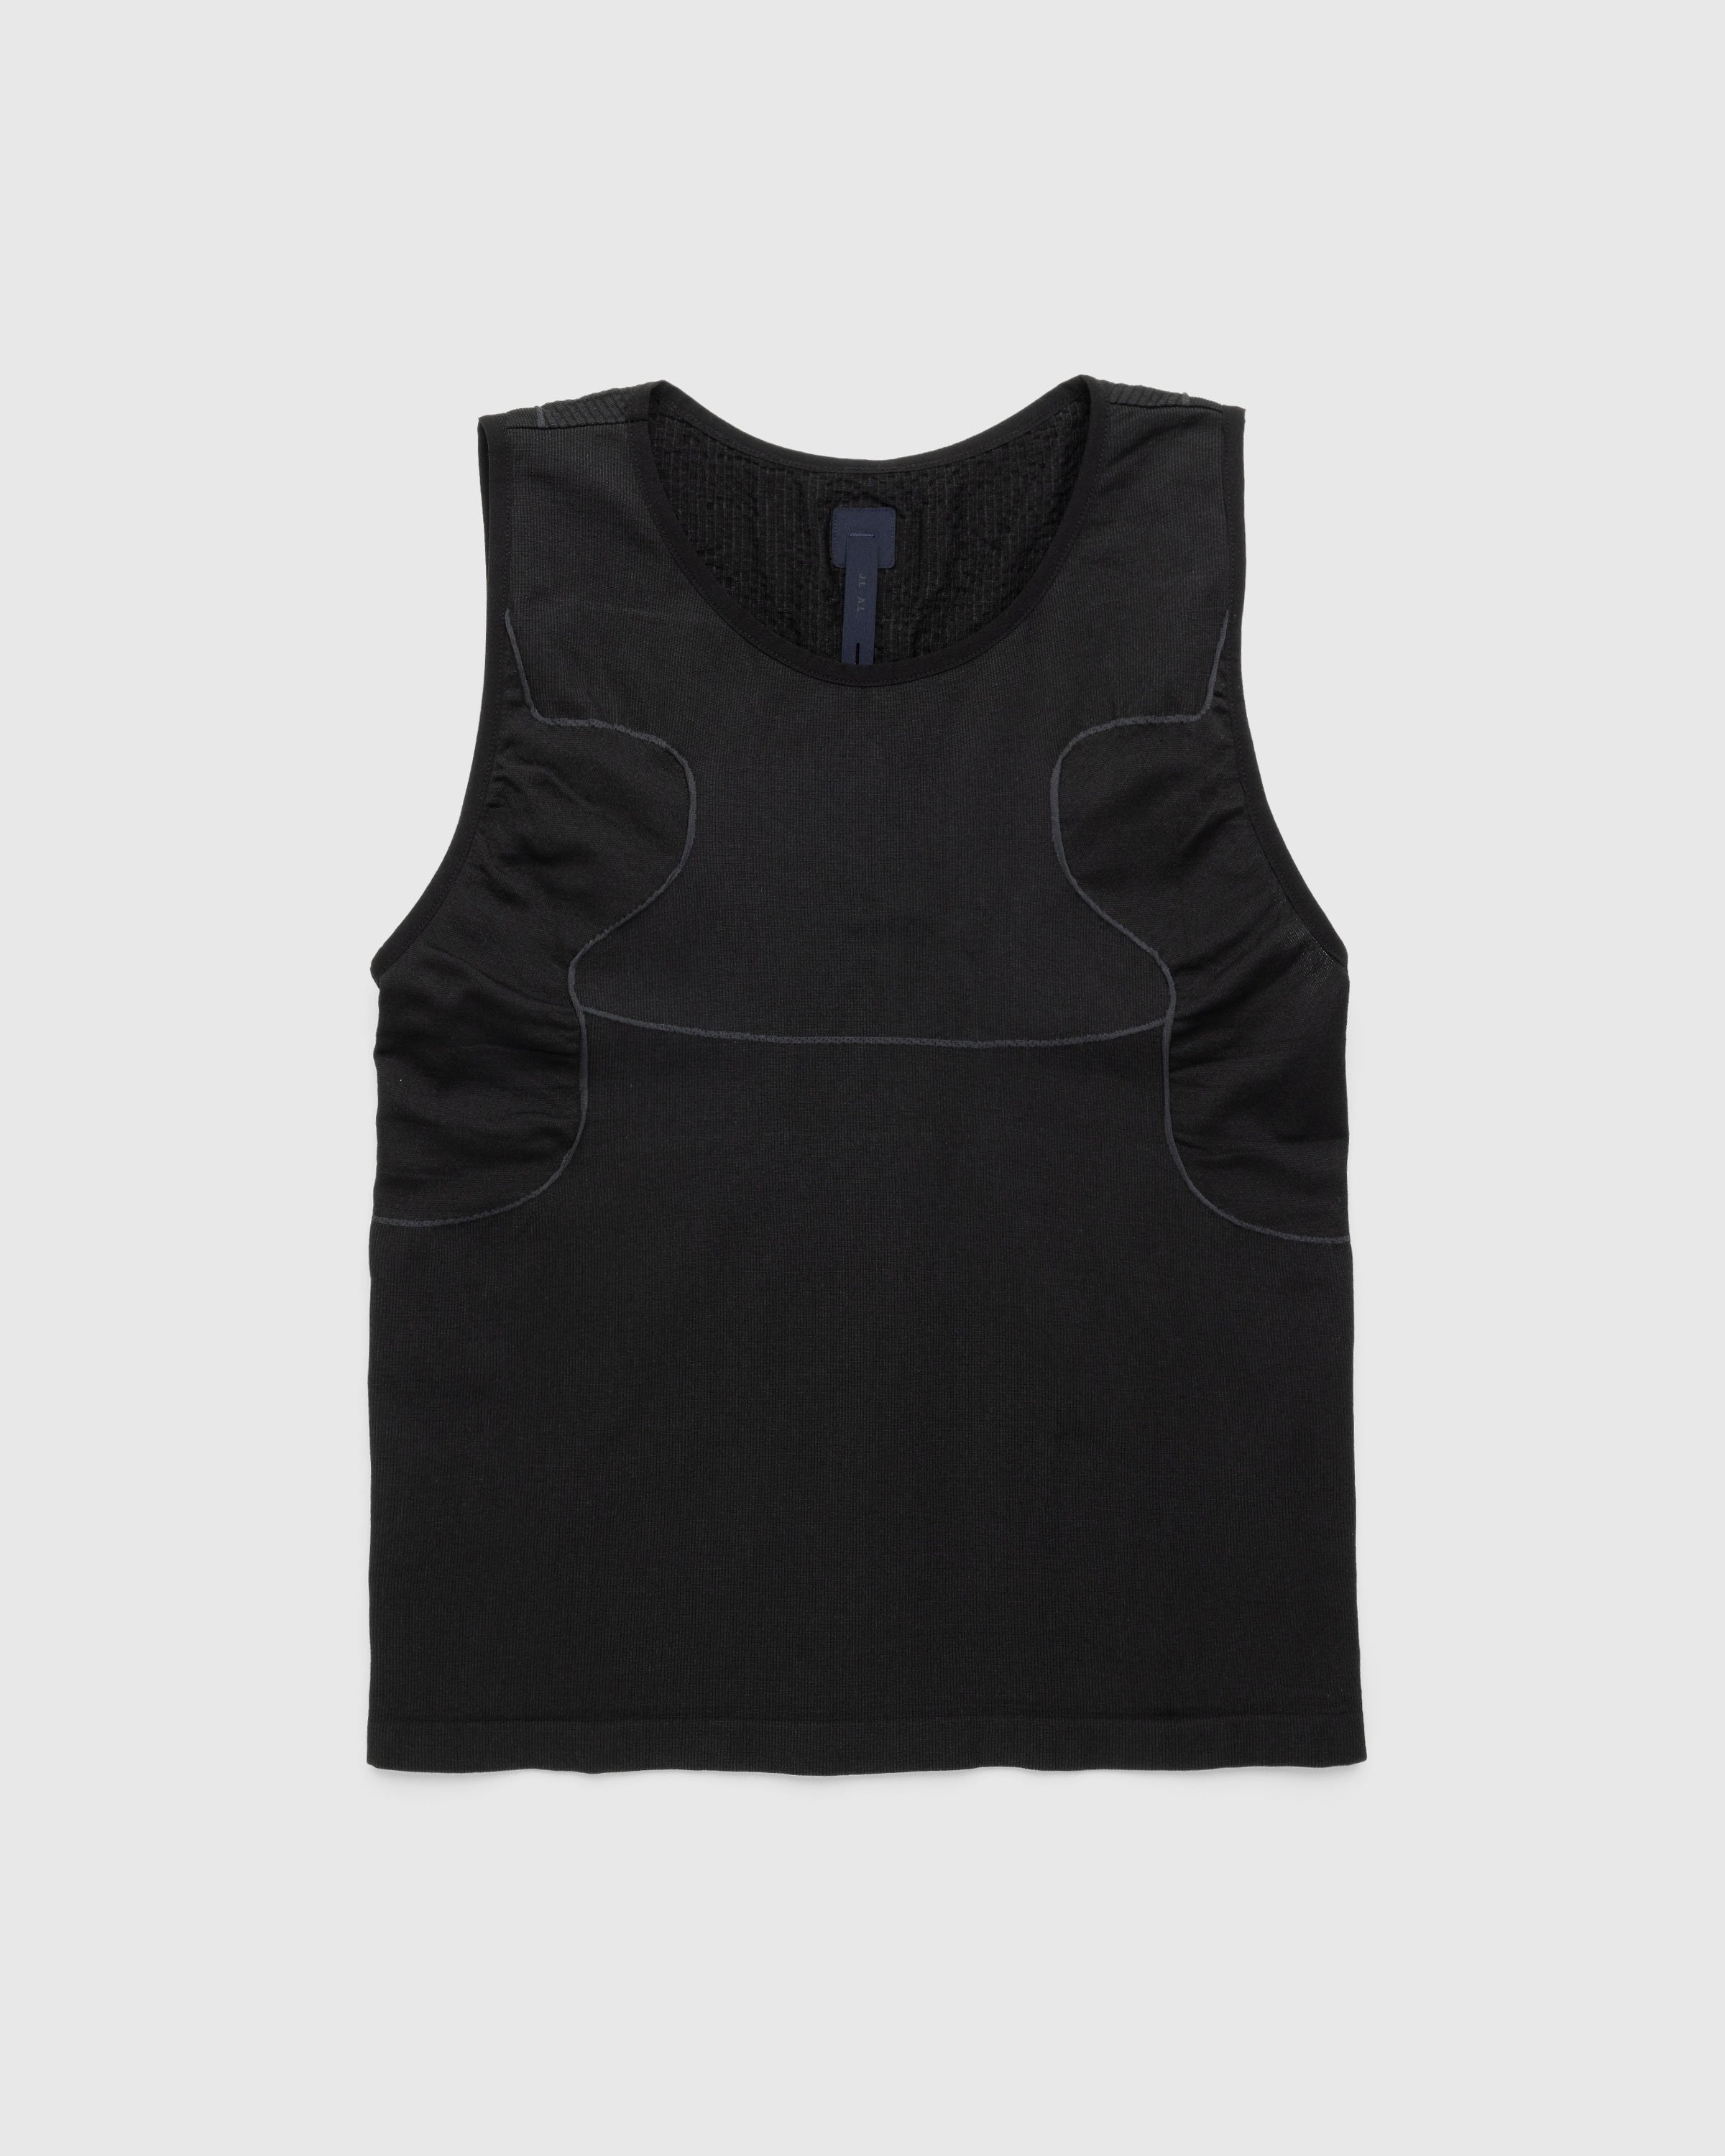 _J.L-A.L_ - Yovchev Knitted Vest Black/Grey - Clothing - Black - Image 1